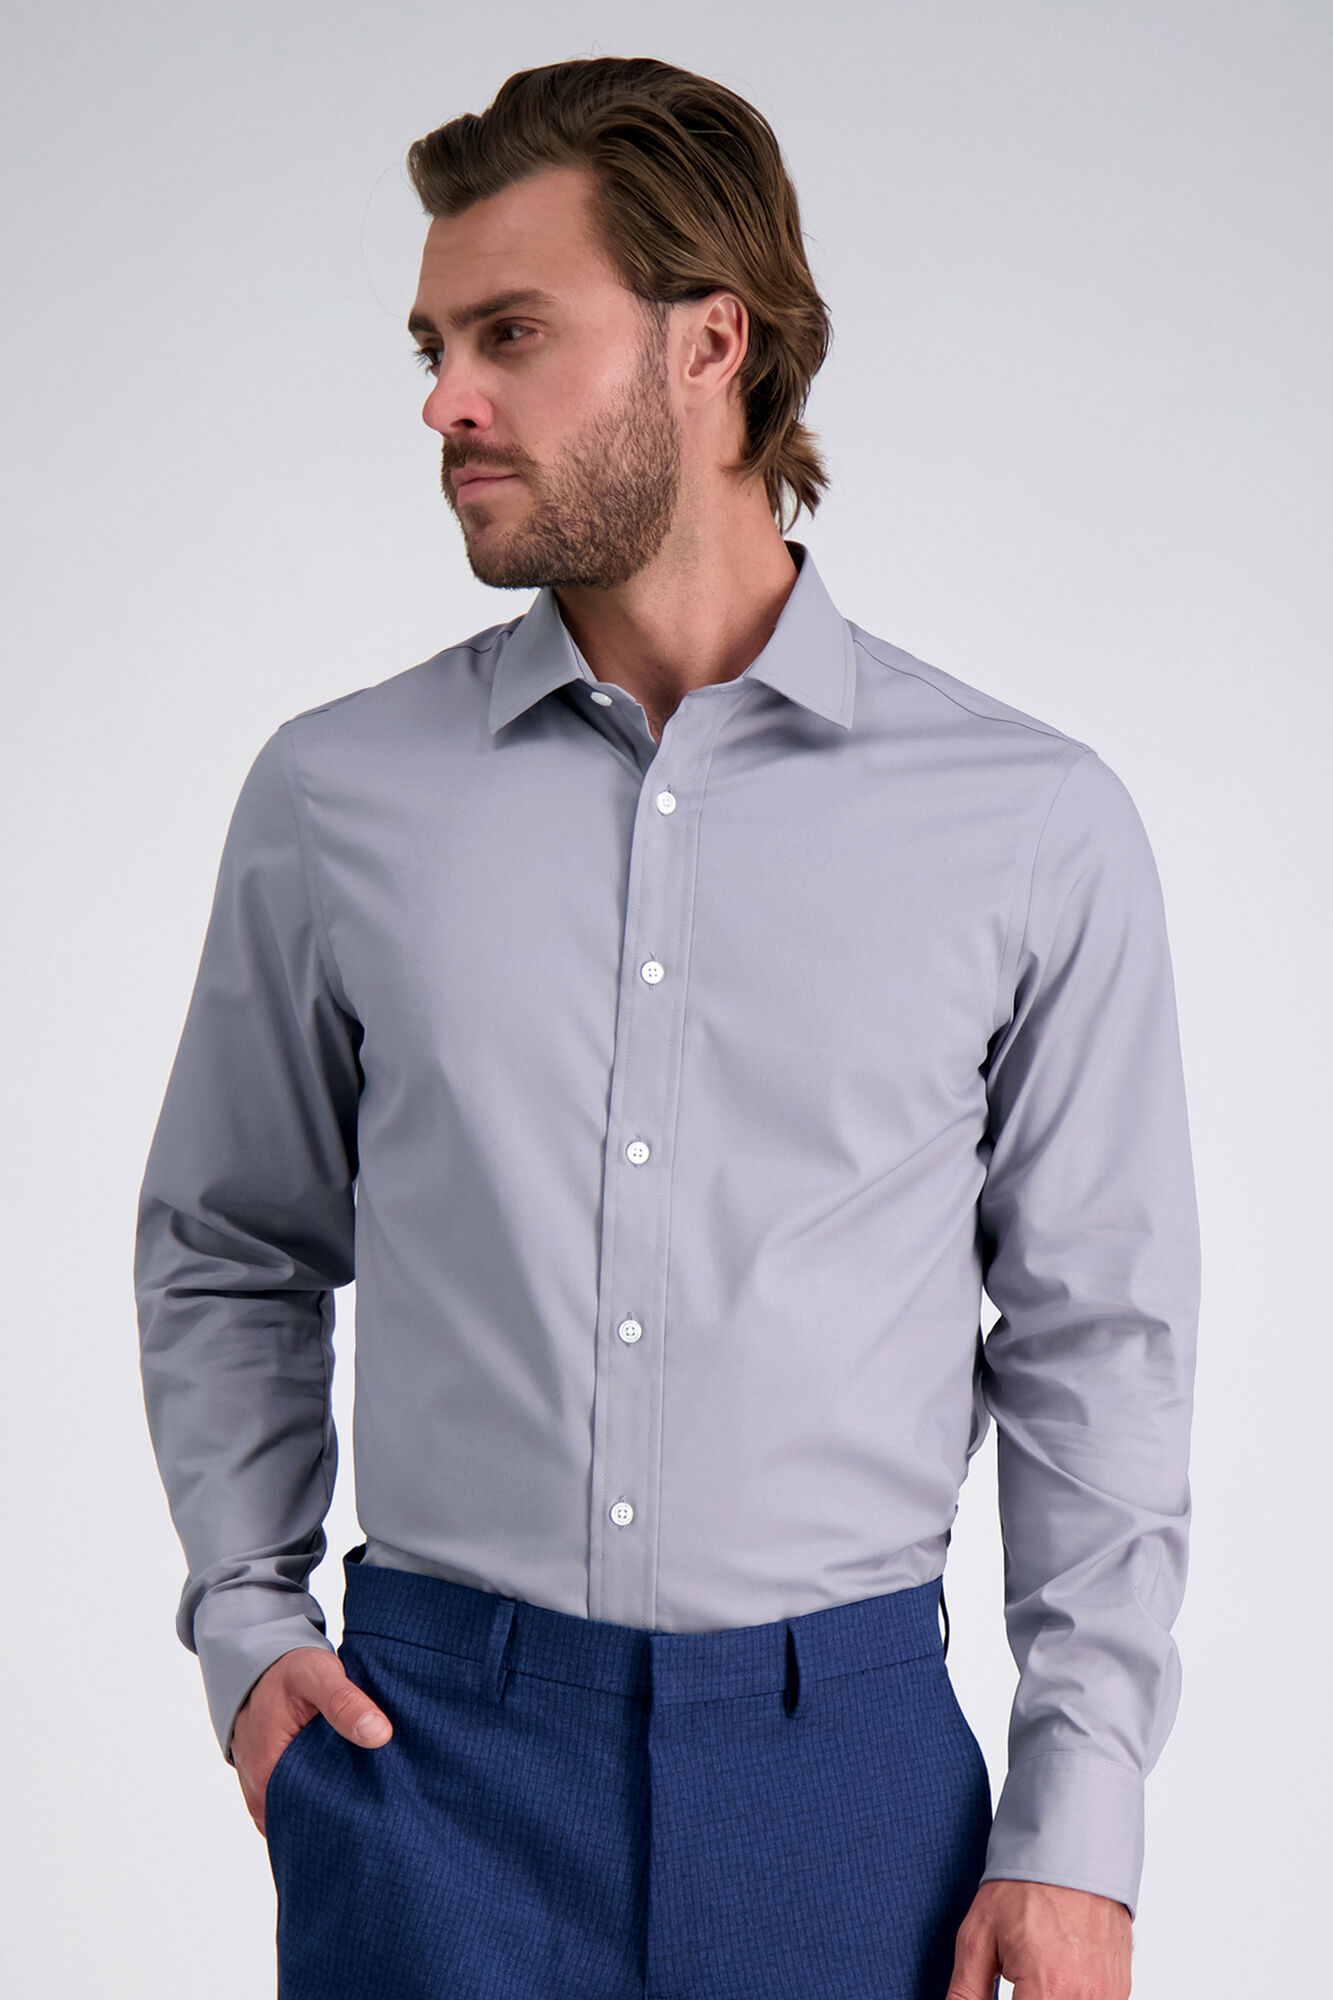 Haggar Premium Comfort Performance Cotton Dress Shirt - Charcoal Graphite (HAG028HE512 Clothing Shirts & Tops) photo